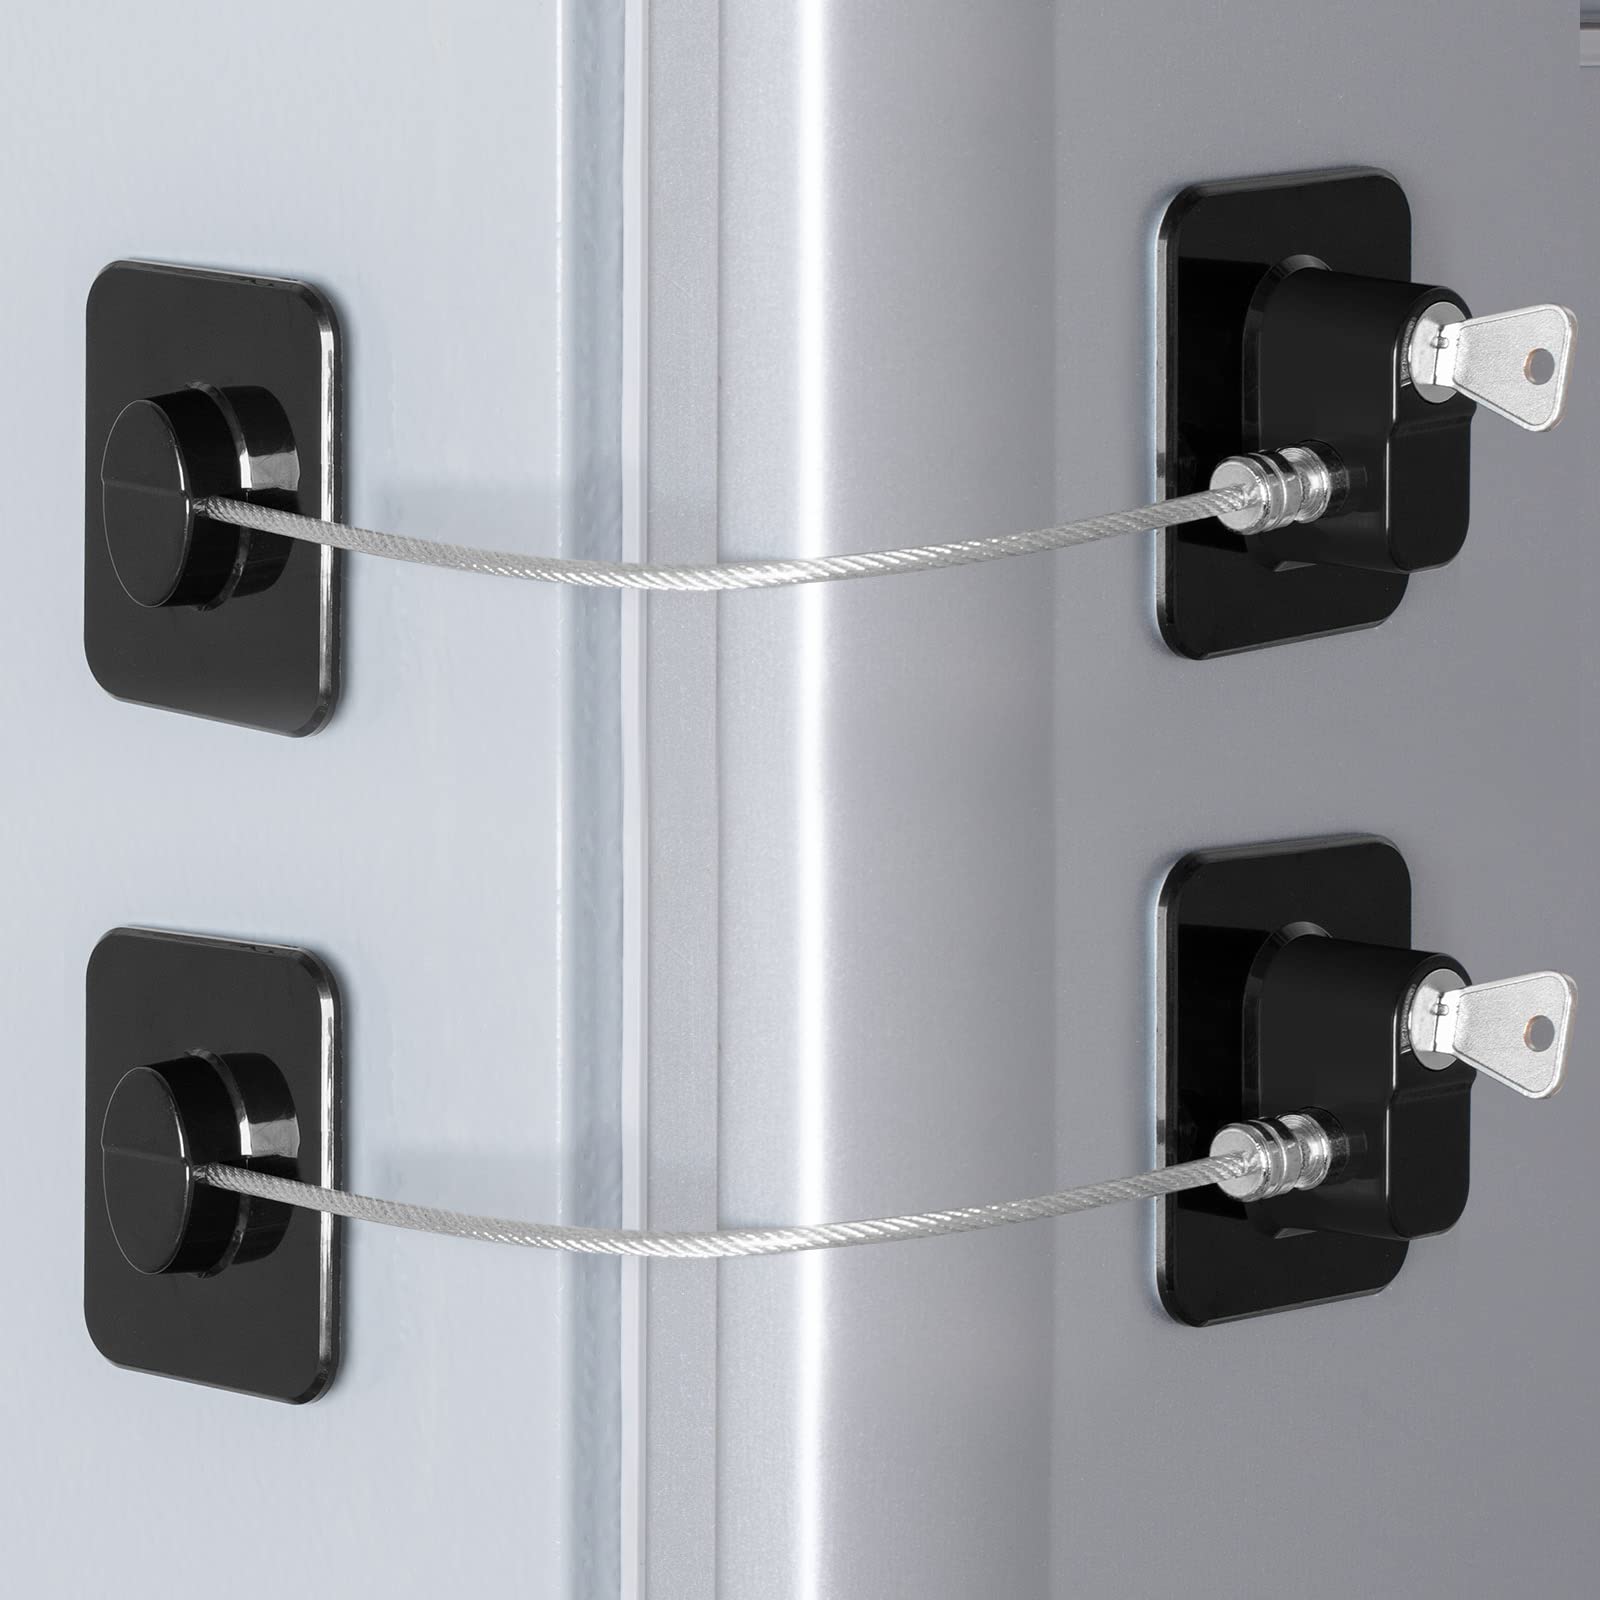 Refrigerator Door Locks, Fridge Lock With Keys, File Drawer and